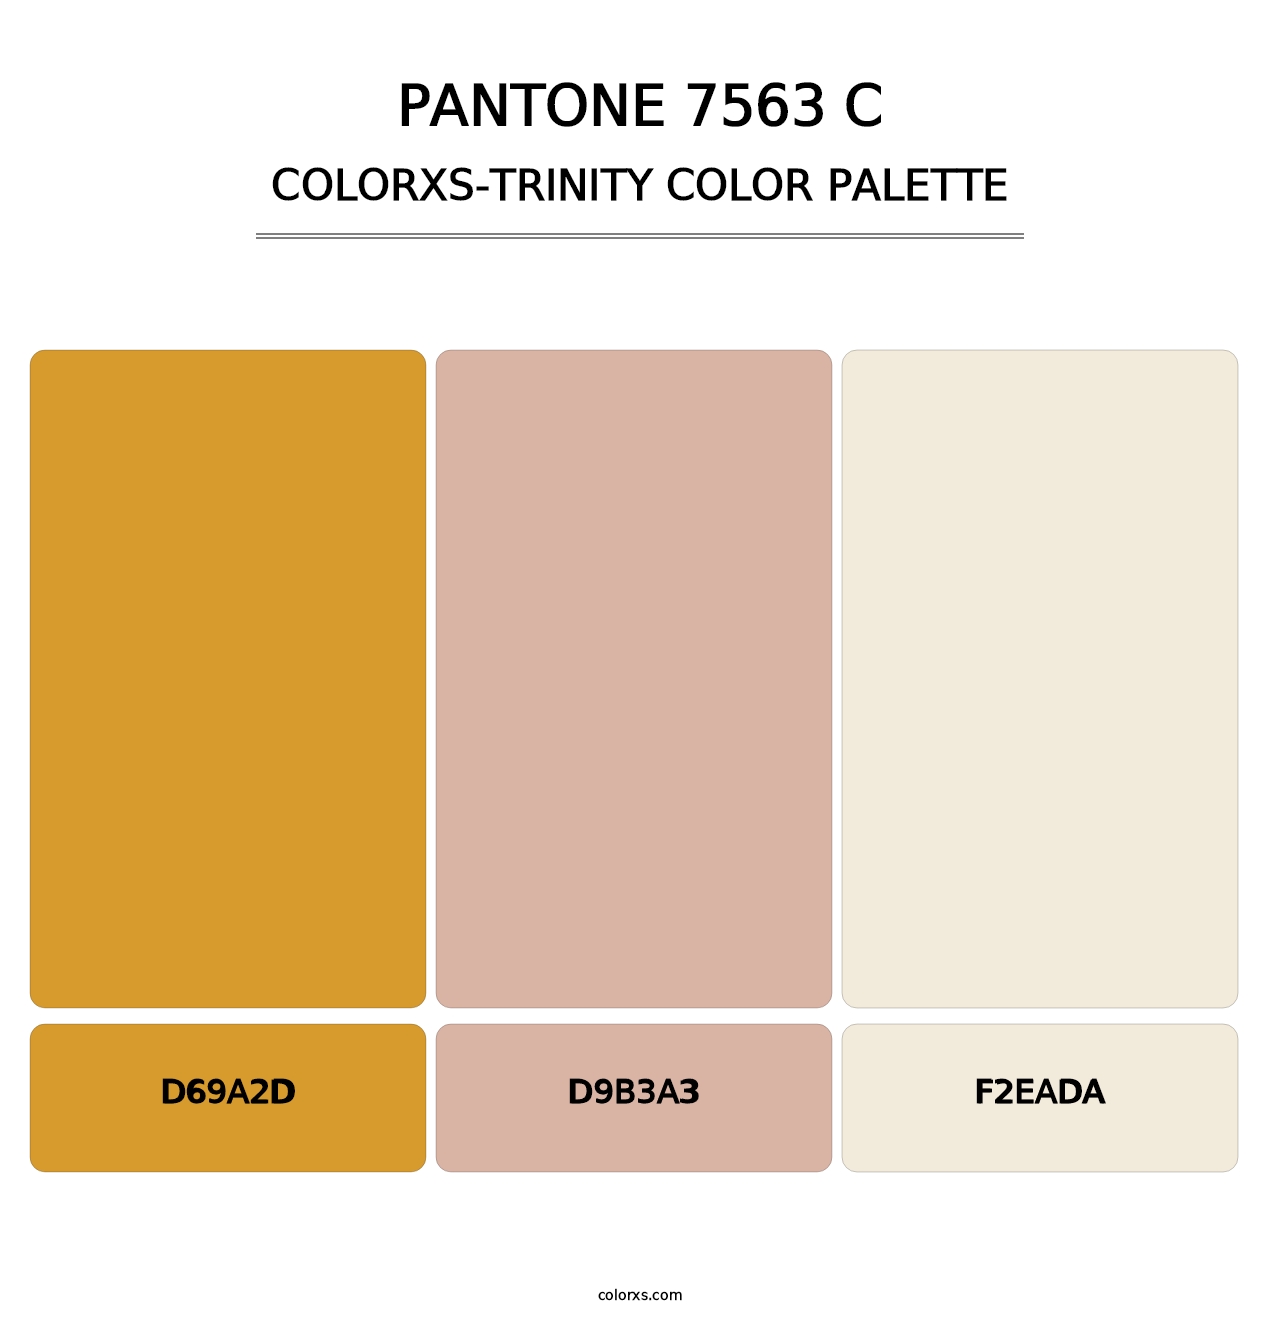 PANTONE 7563 C - Colorxs Trinity Palette